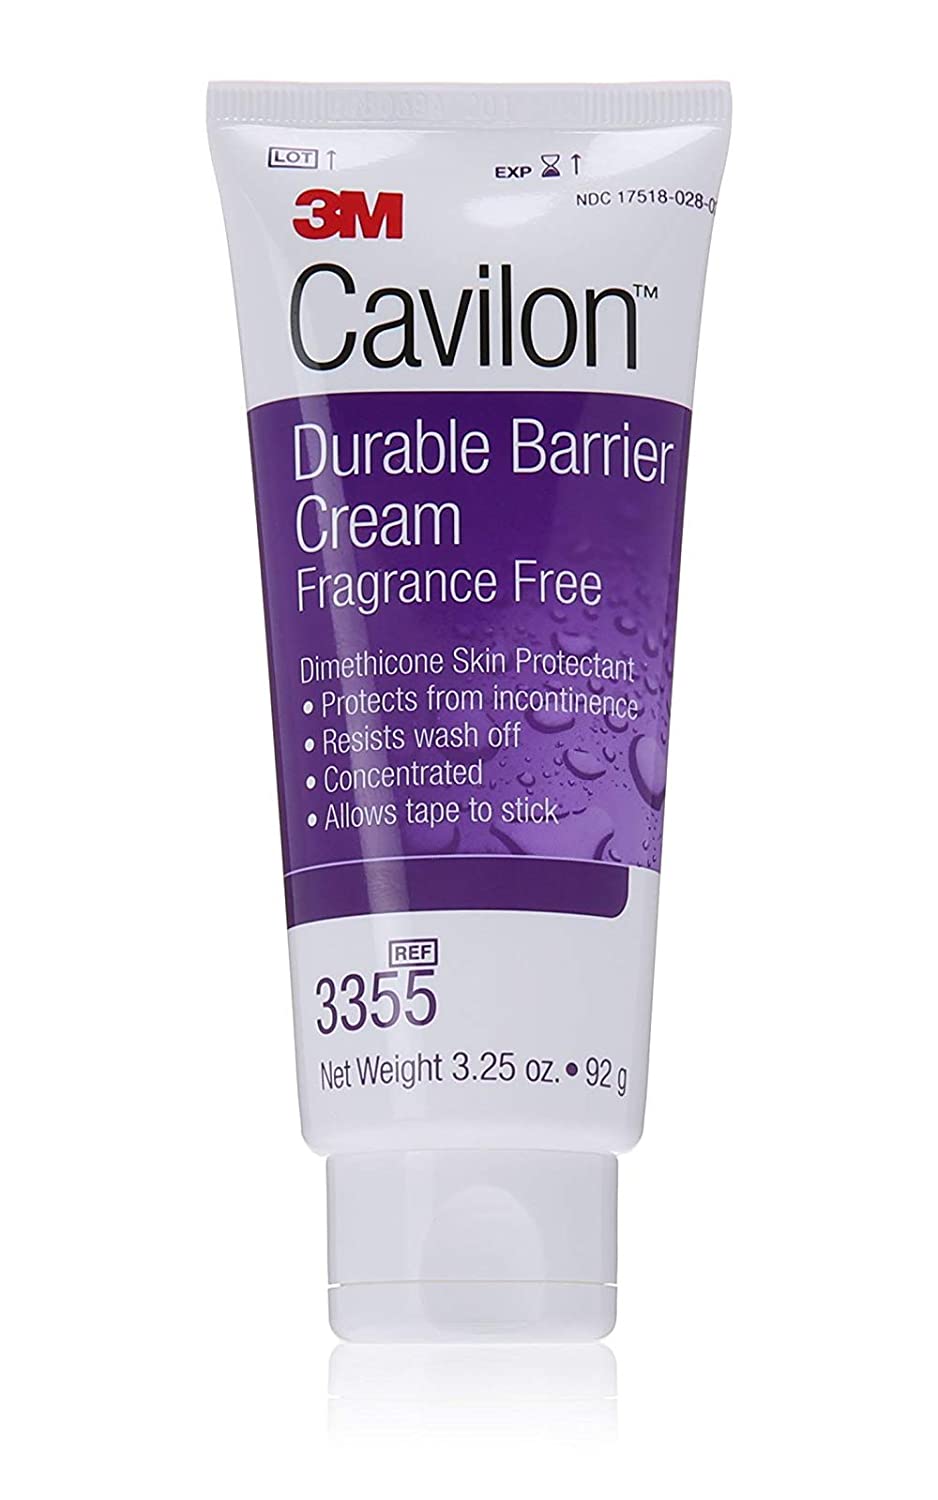 3M Cavilon Durable Barrier Cream 3355 - Skin Protectant Cream, Fragrance-Free, Hypoallergenic, Tube - 3.25 oz, Pack of 2